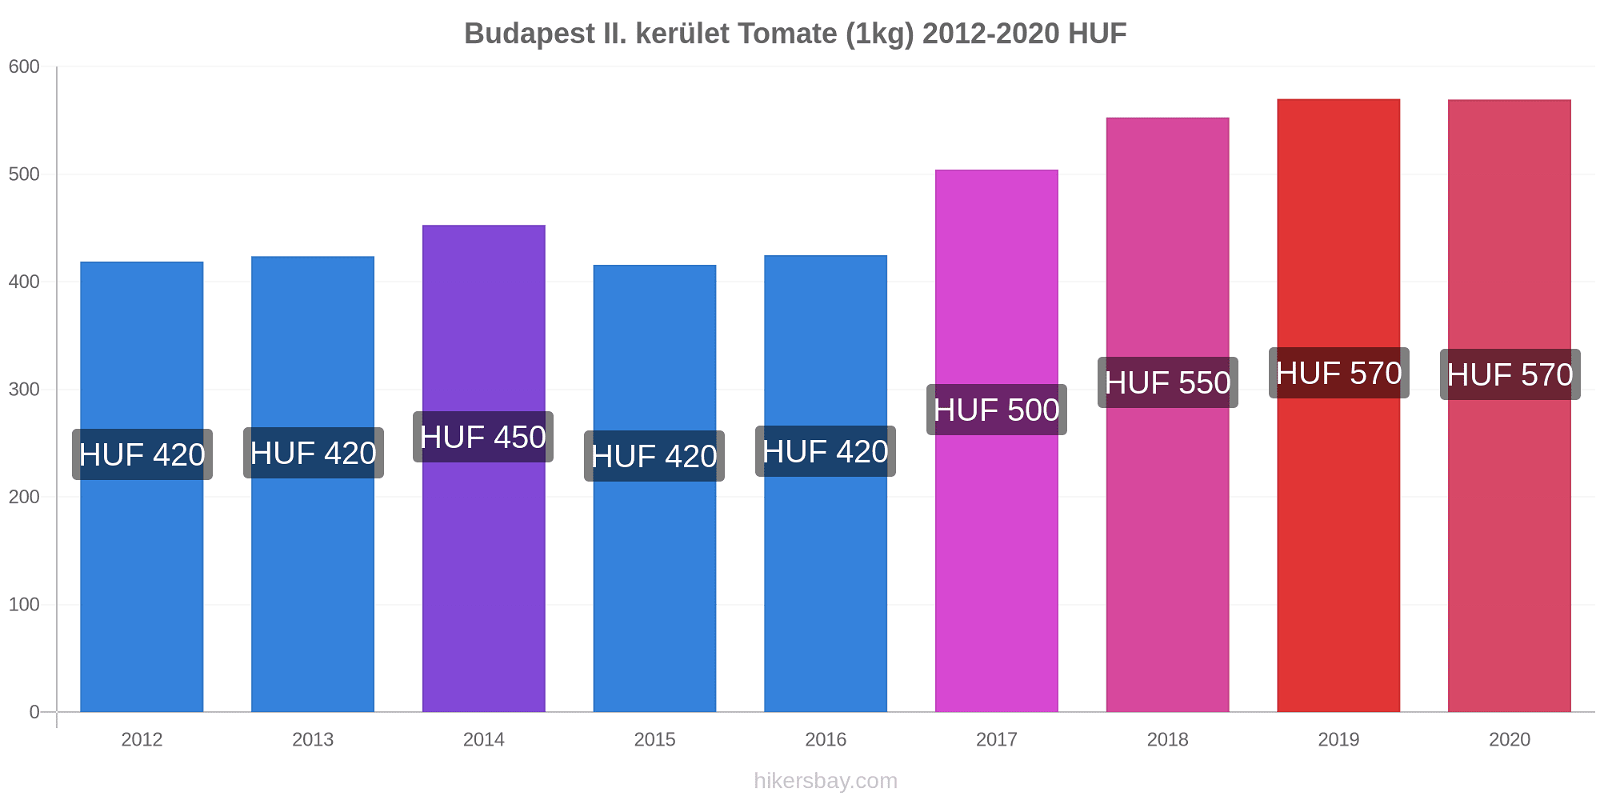 Budapest II. kerület changements de prix Tomate (1kg) hikersbay.com